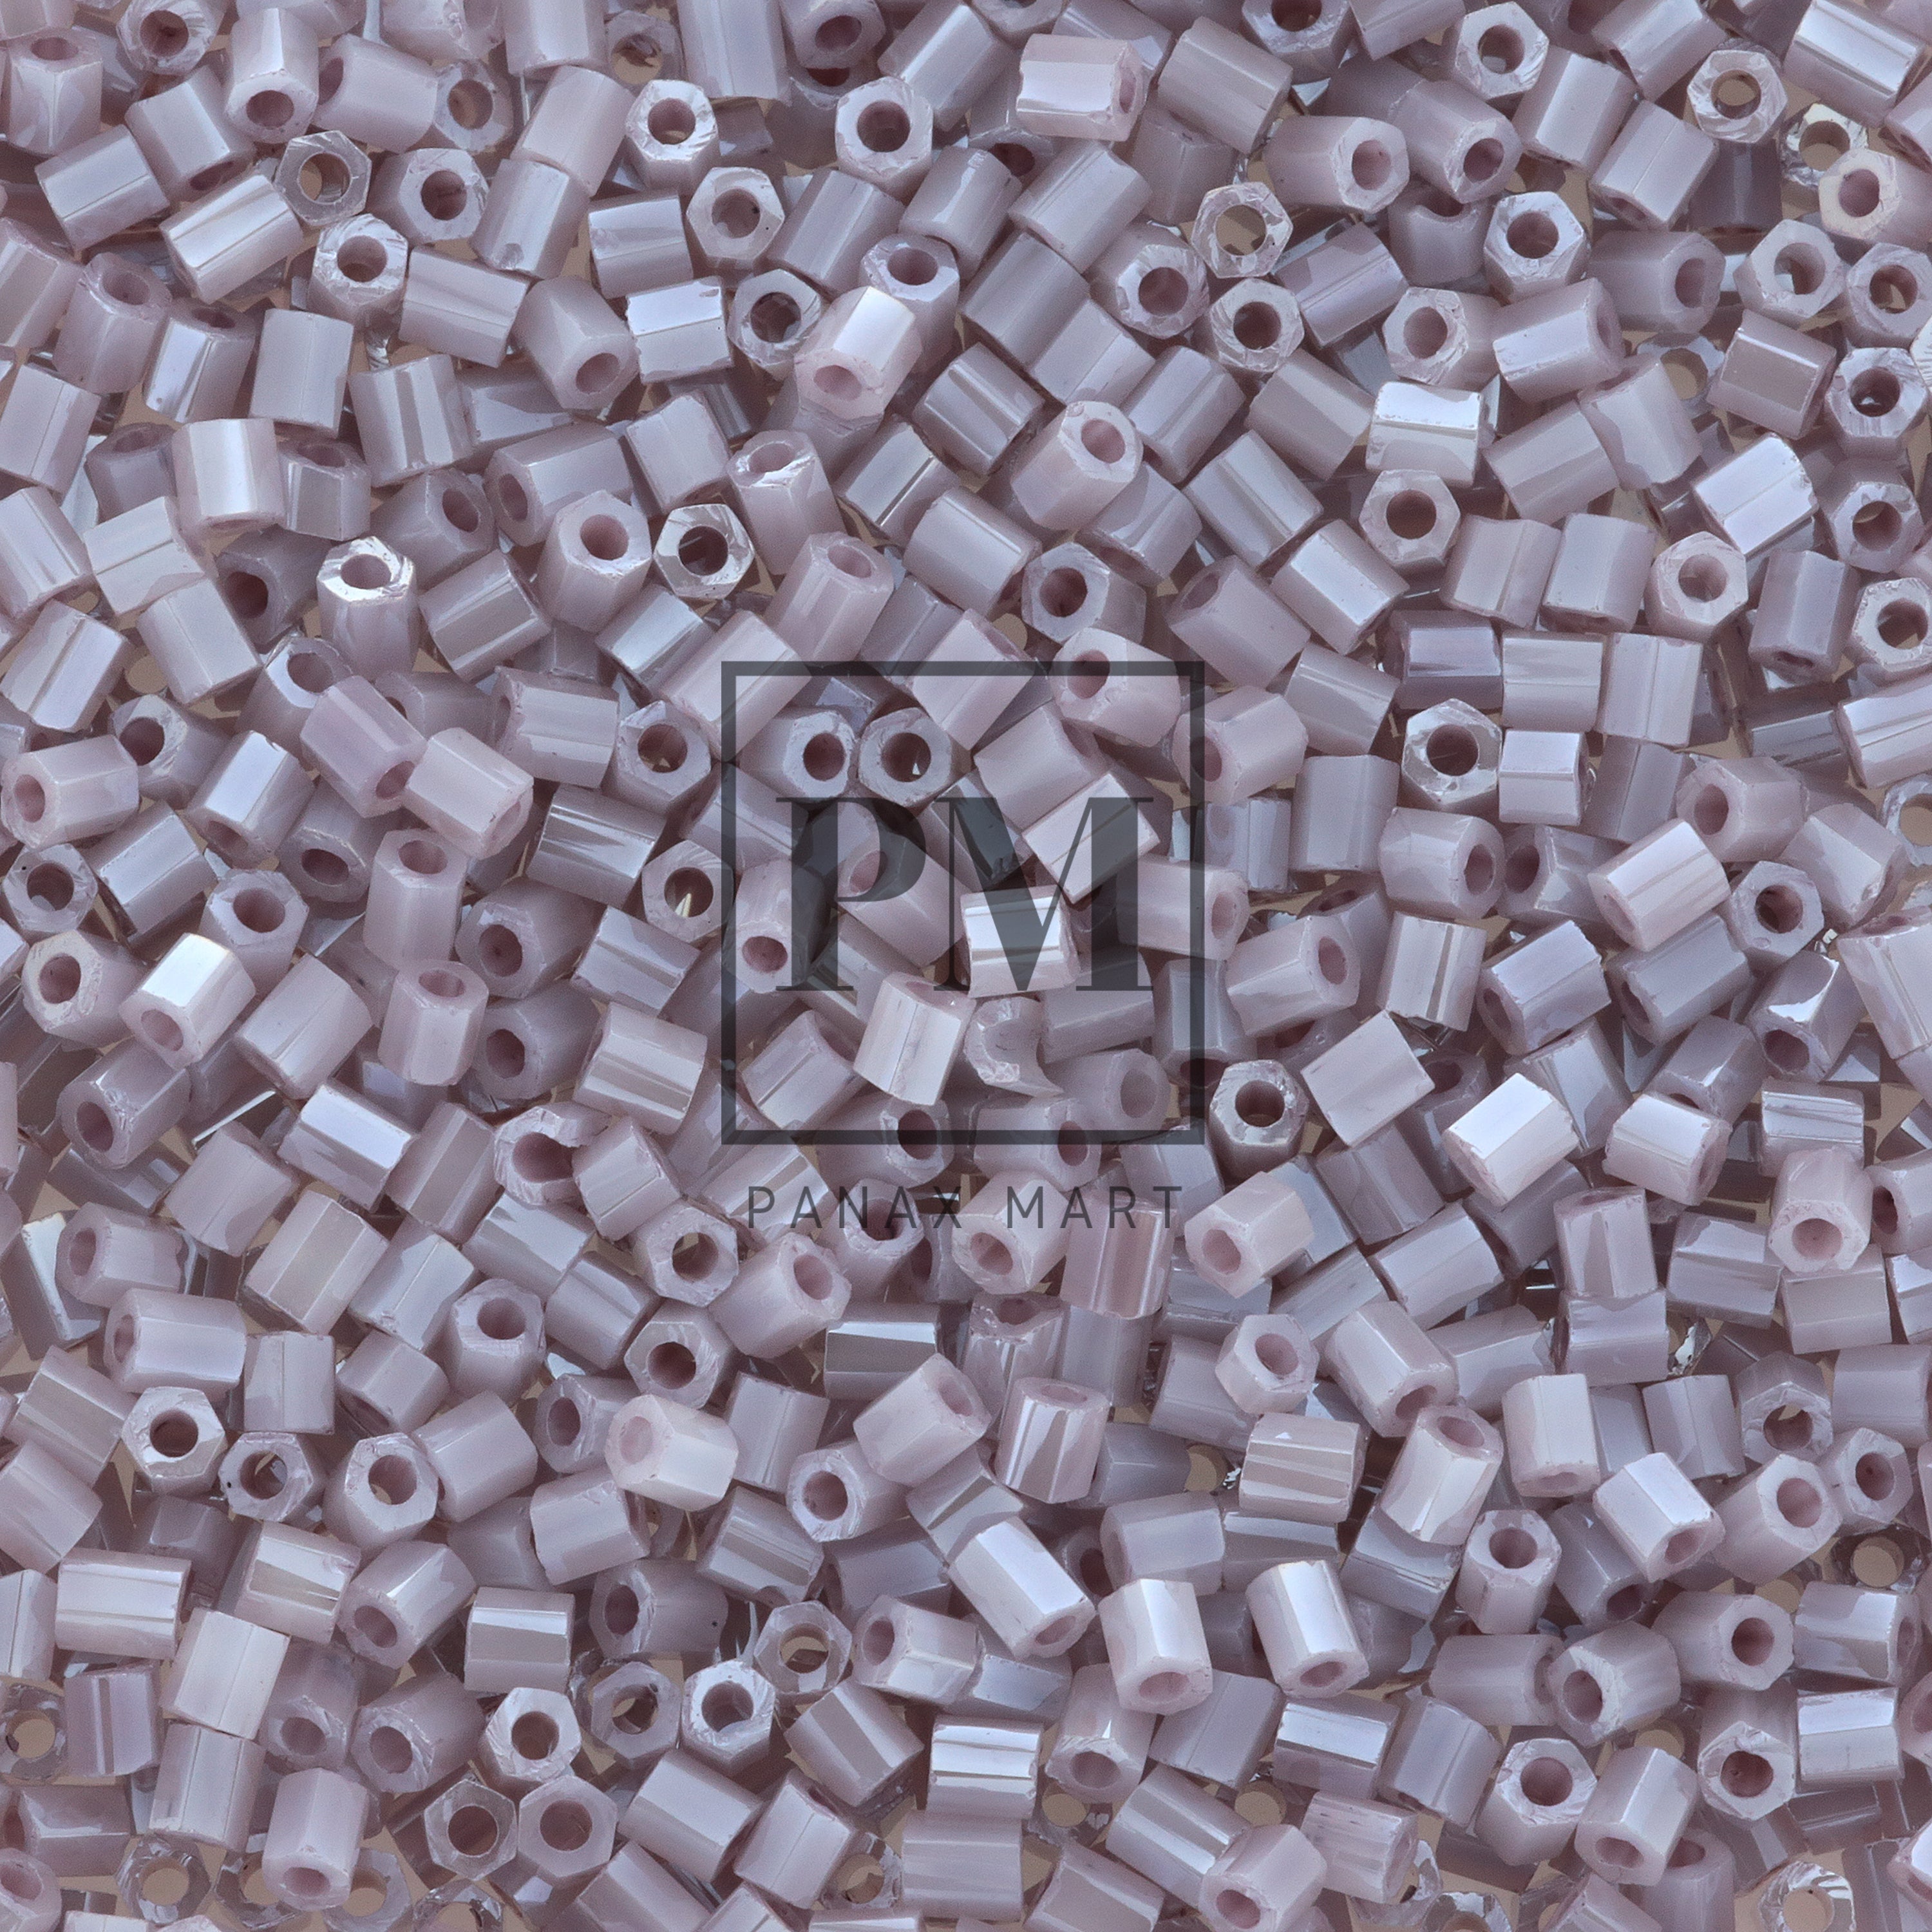 Matsuno Glass Beads (MGB) 11/0 2 CUT 341 - Panax Mart